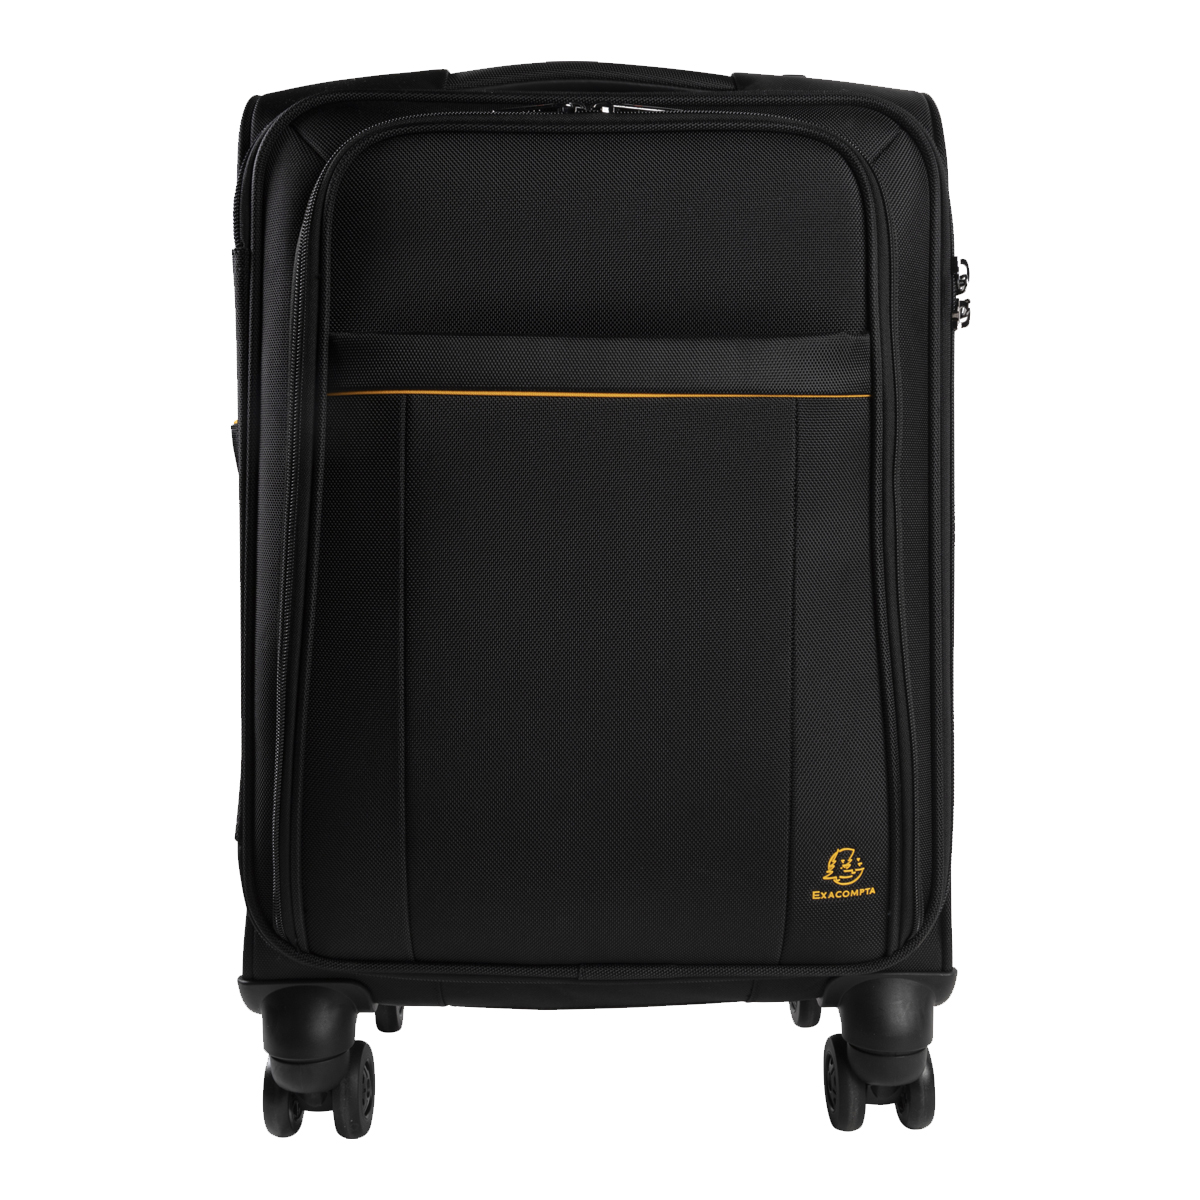 Exacompta kabinový kufr 4 kolečka Exactive,černý 37 x 55 x 23 cm